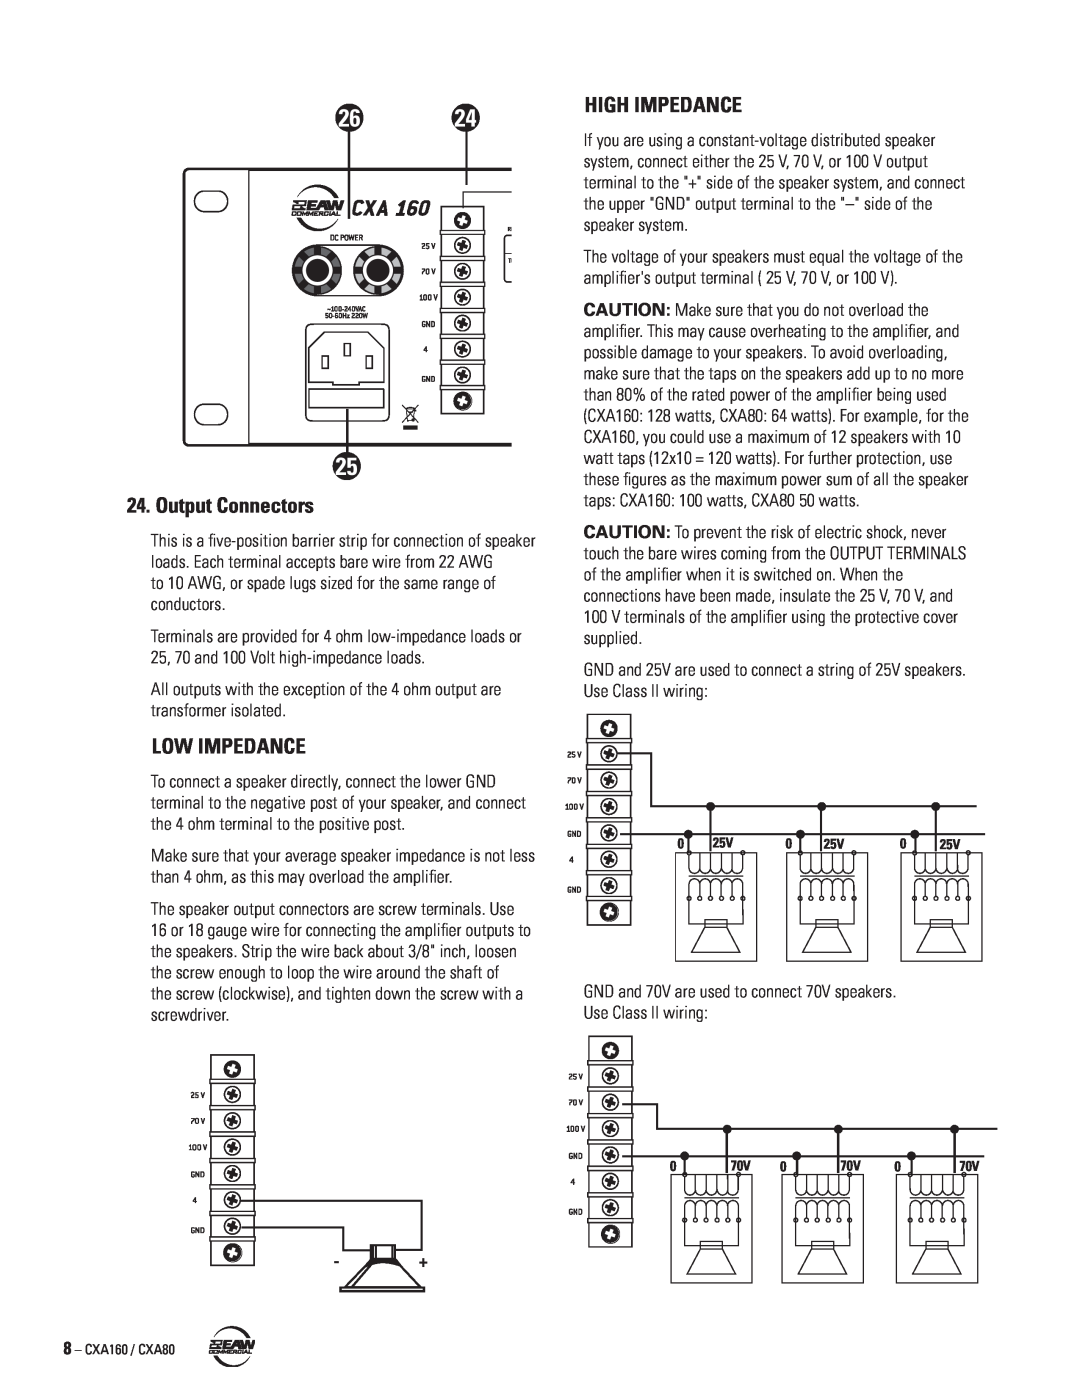 EAW CXA160 / CXA80 instruction manual Output Connectors, Low Impedance, High Impedance 